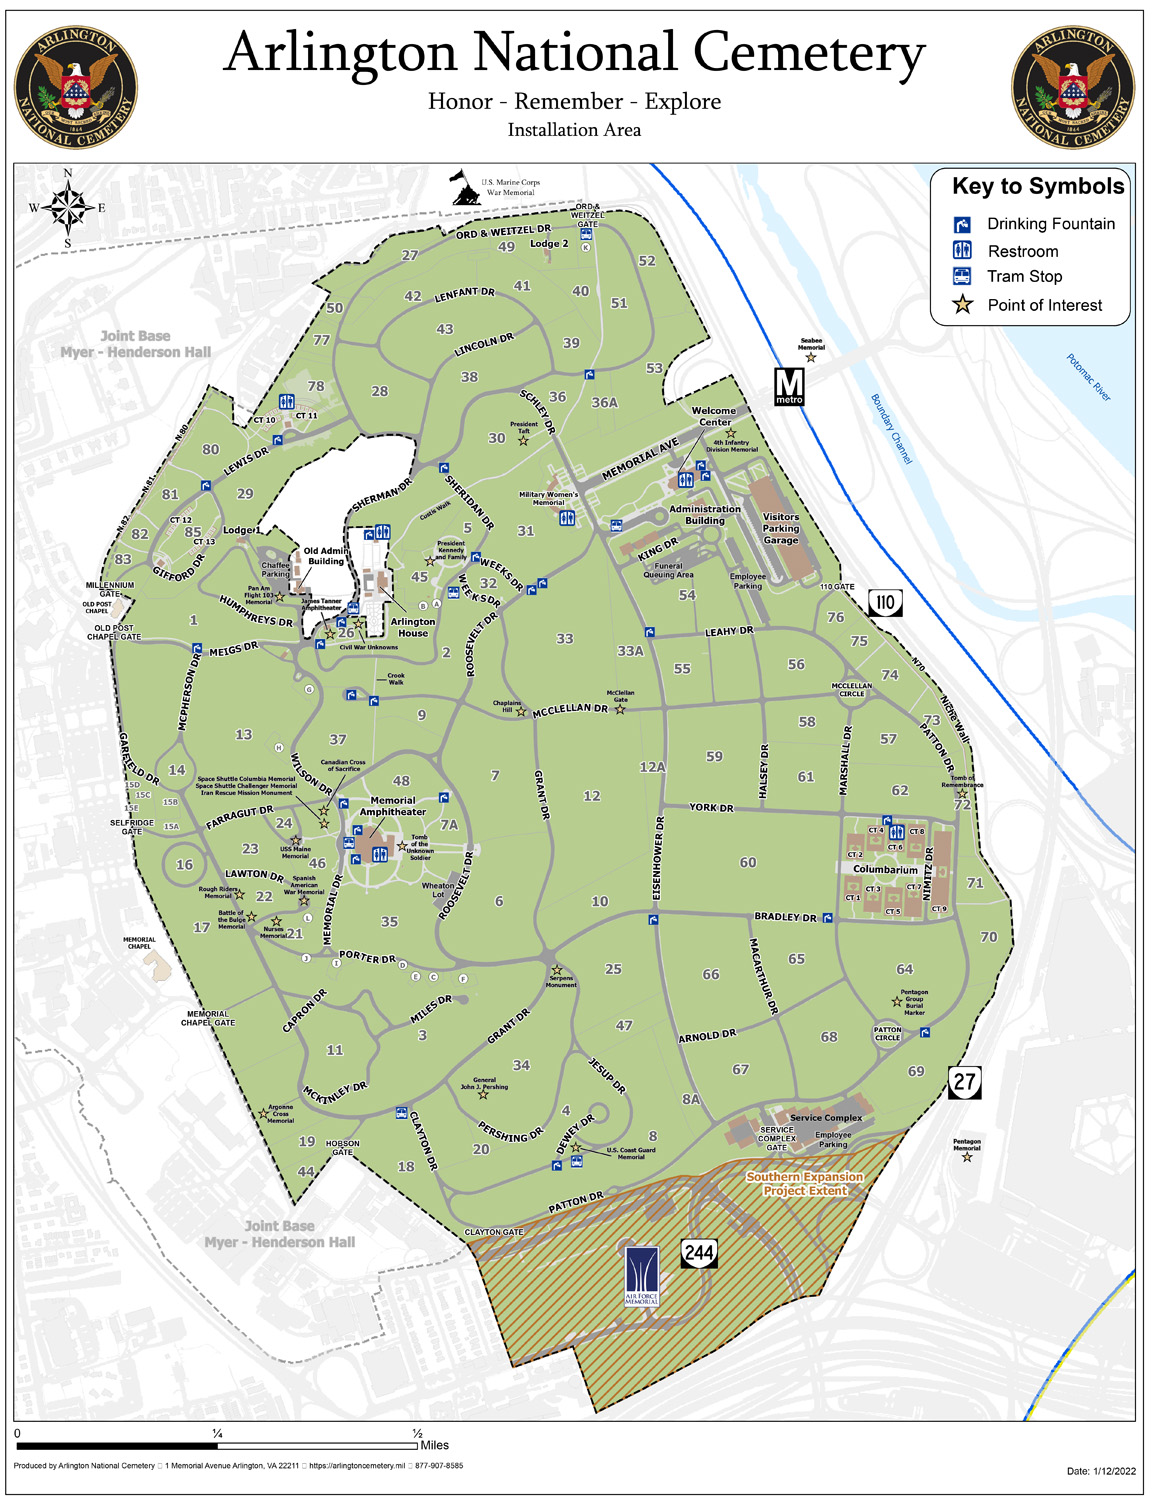 Map of Arlington National Cemetery in Washington D.C.